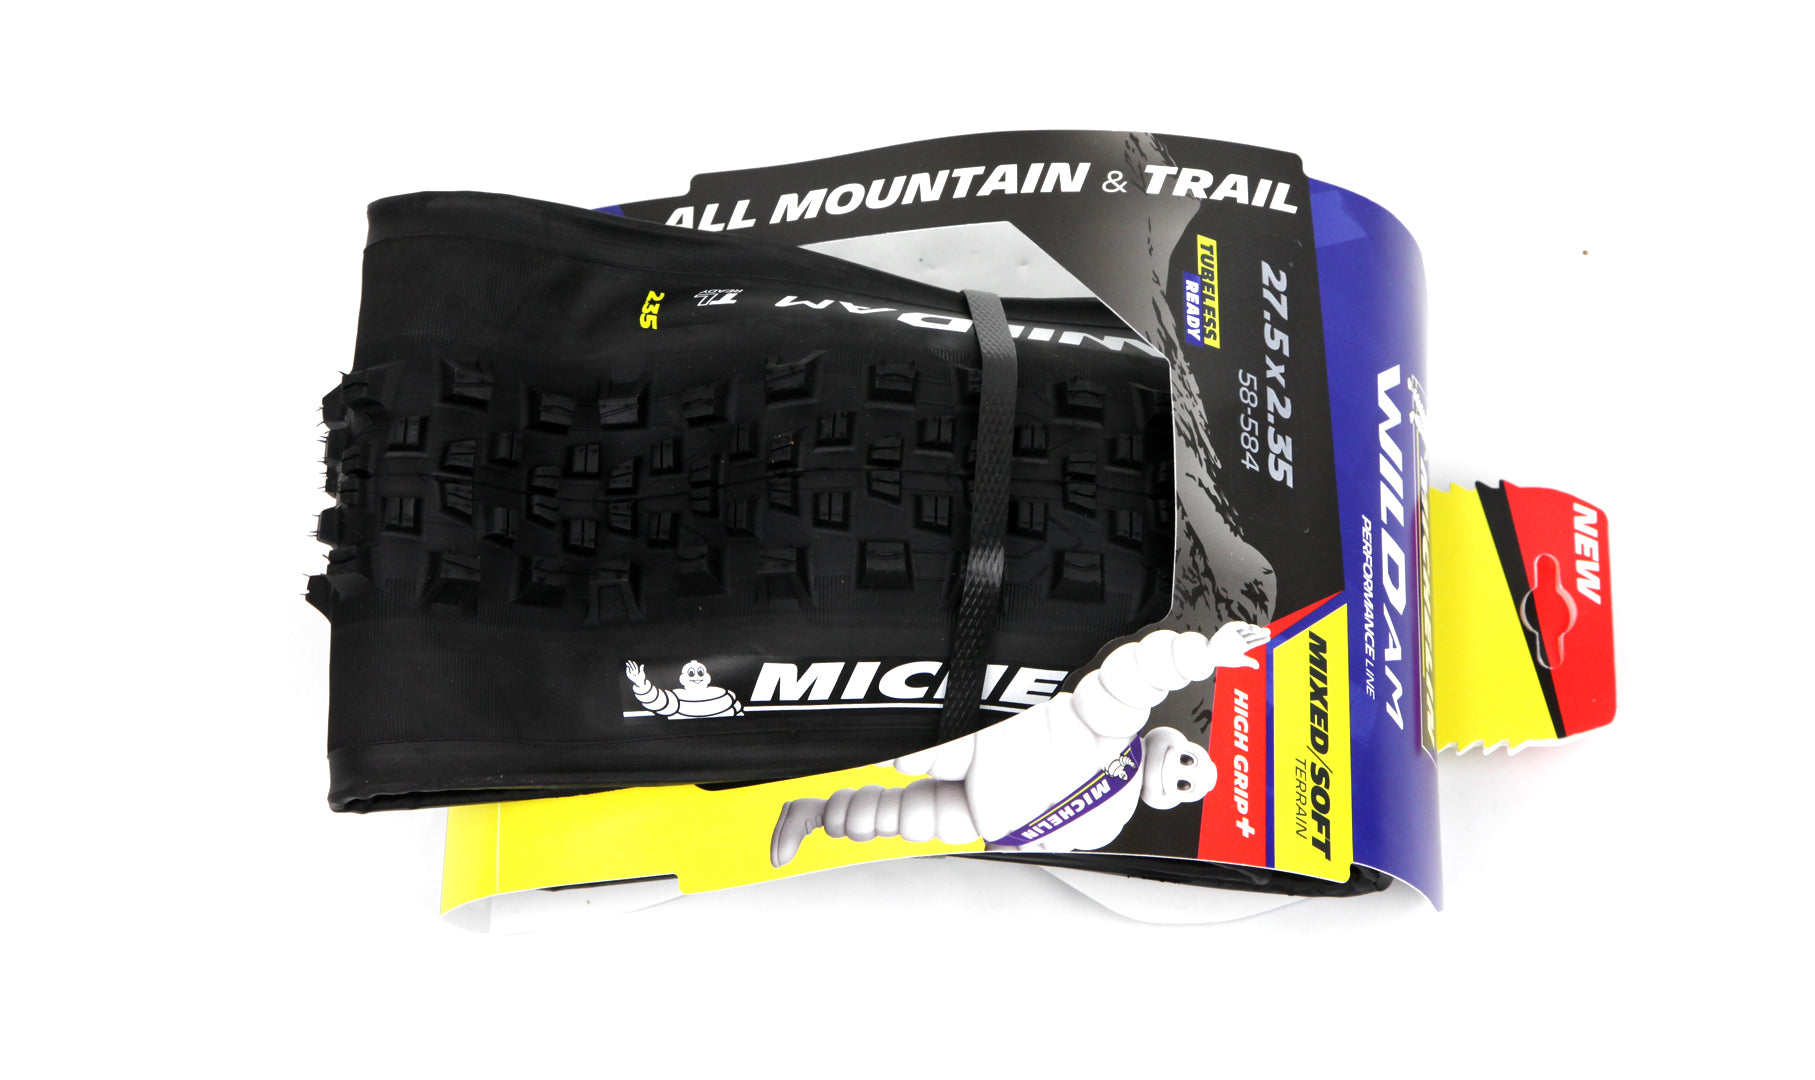 Pneu Michelin Wild AM Performance Line - Gum-X - Trail Shield - Tubeless Ready 